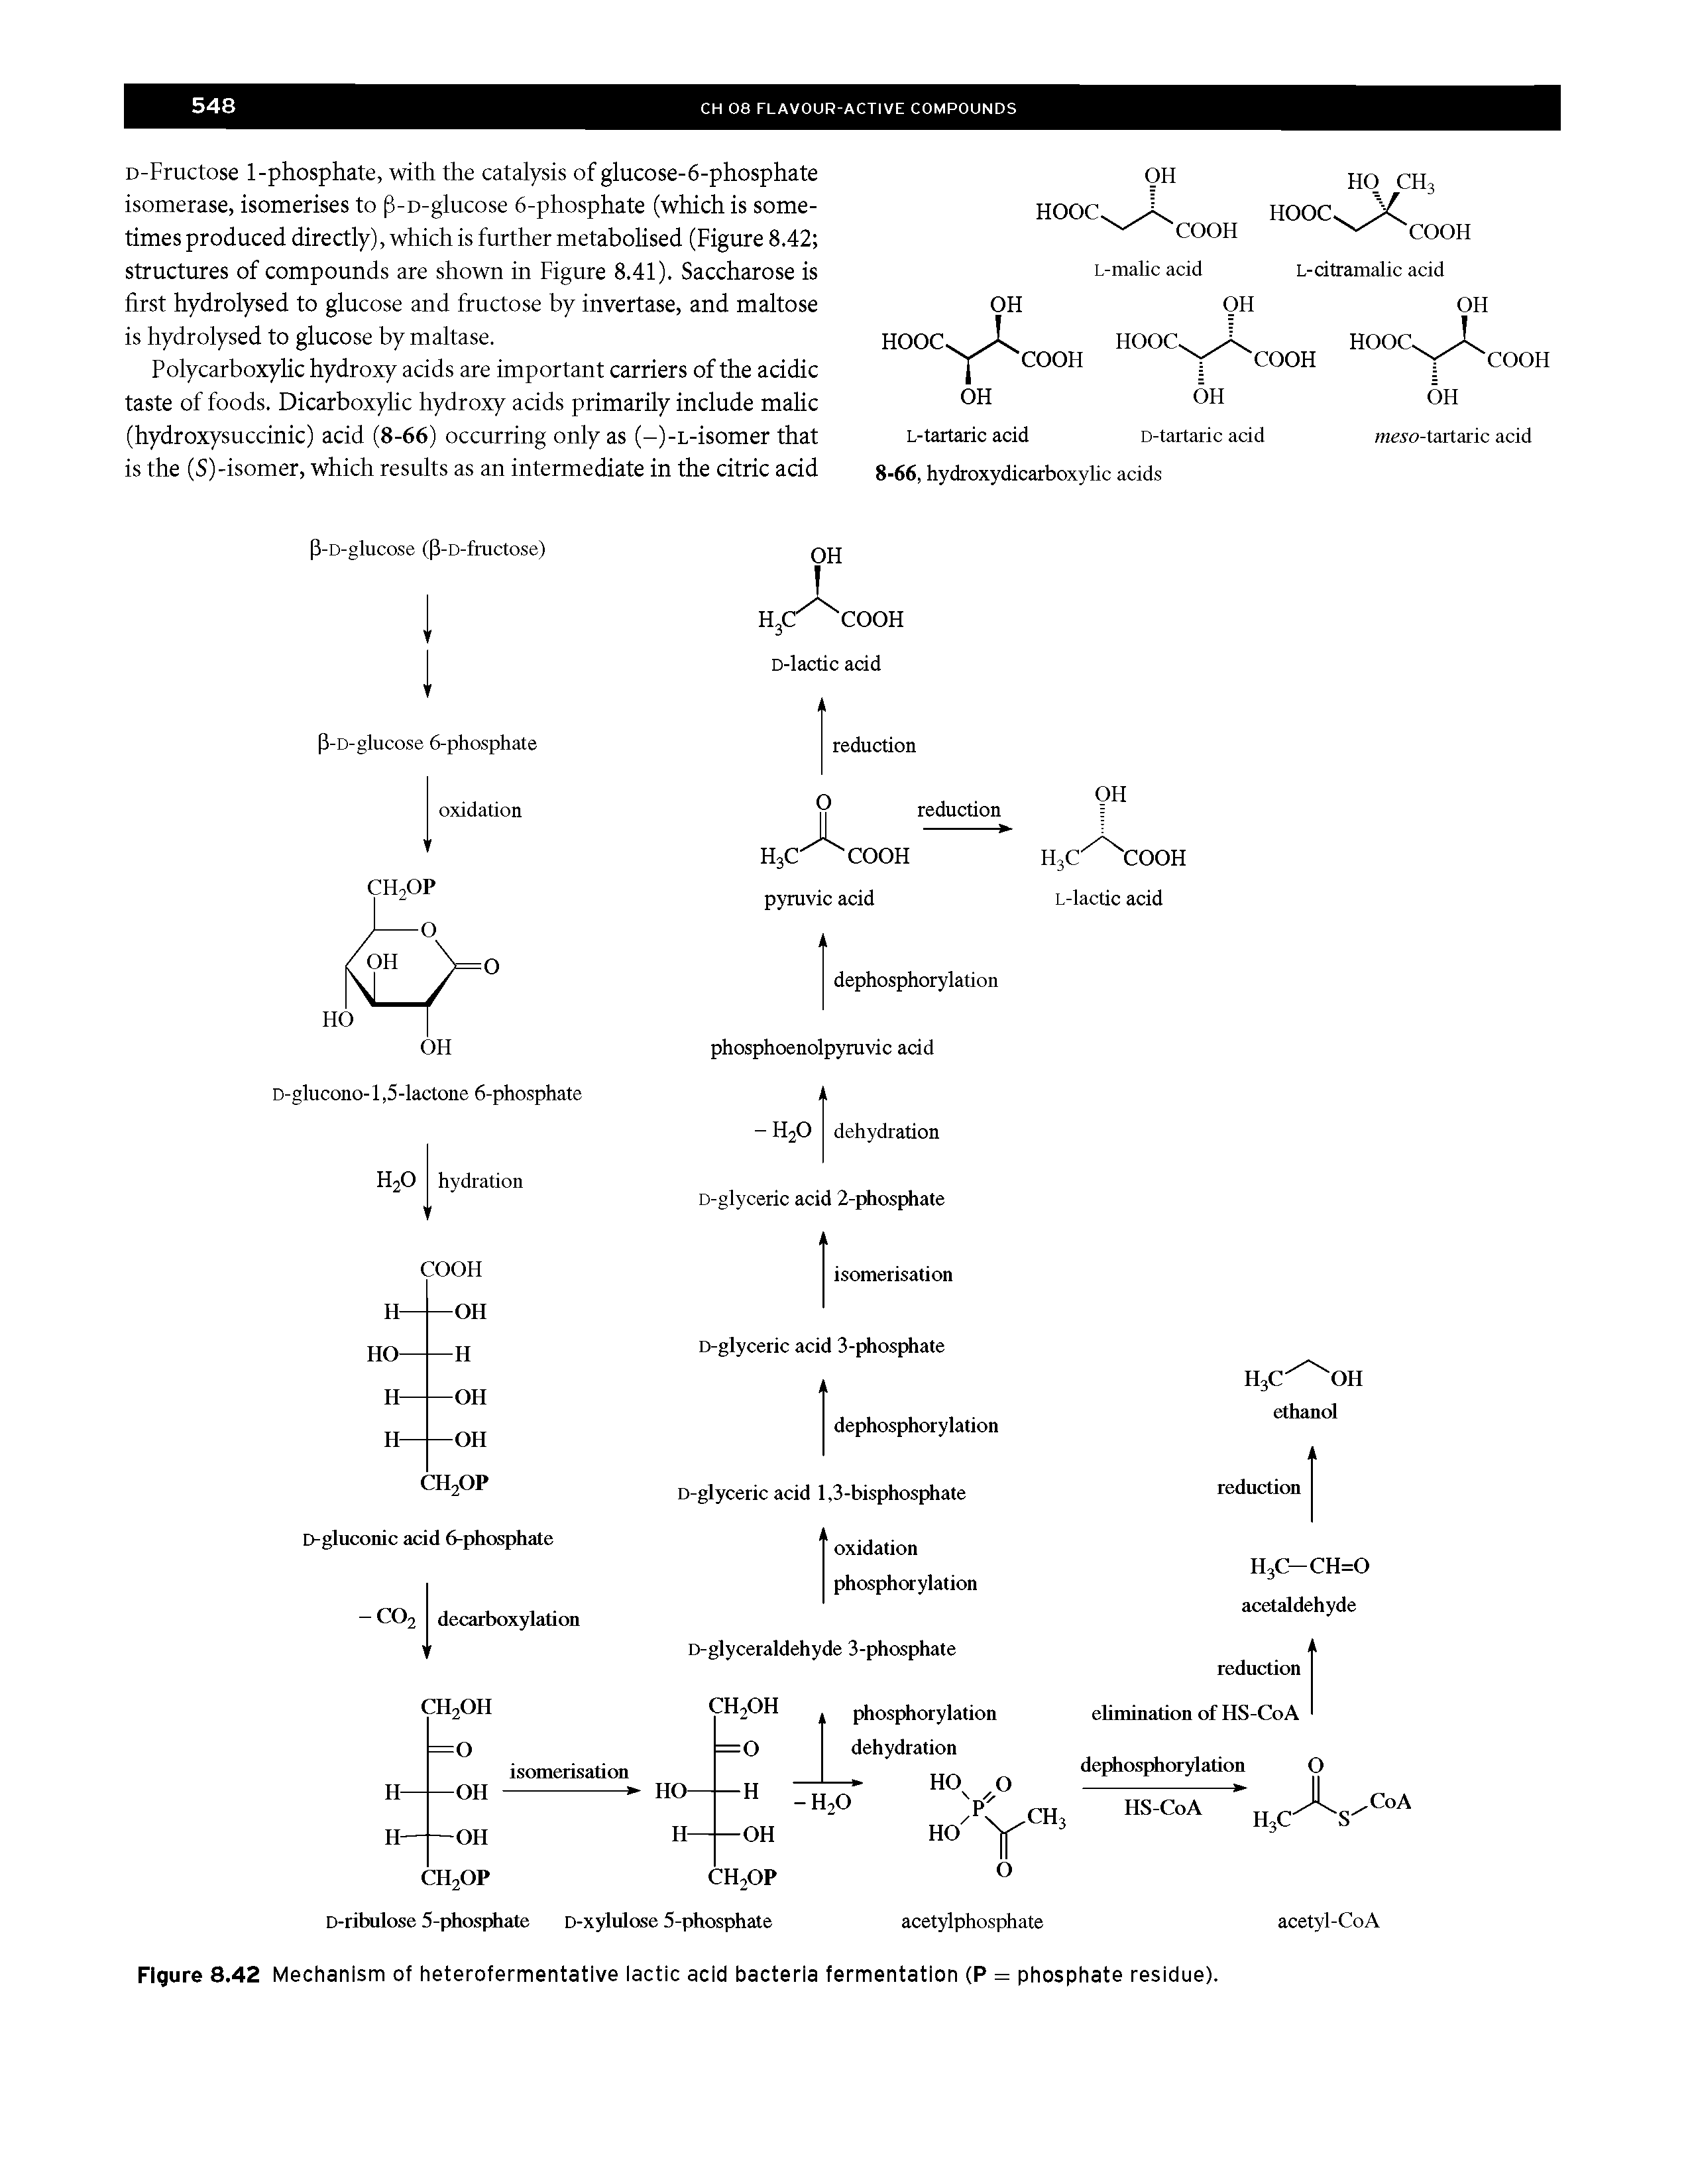 Figure 8.42 Mechanism of heterofermentative lactic acid bacteria fermentation (P = phosphate residue).